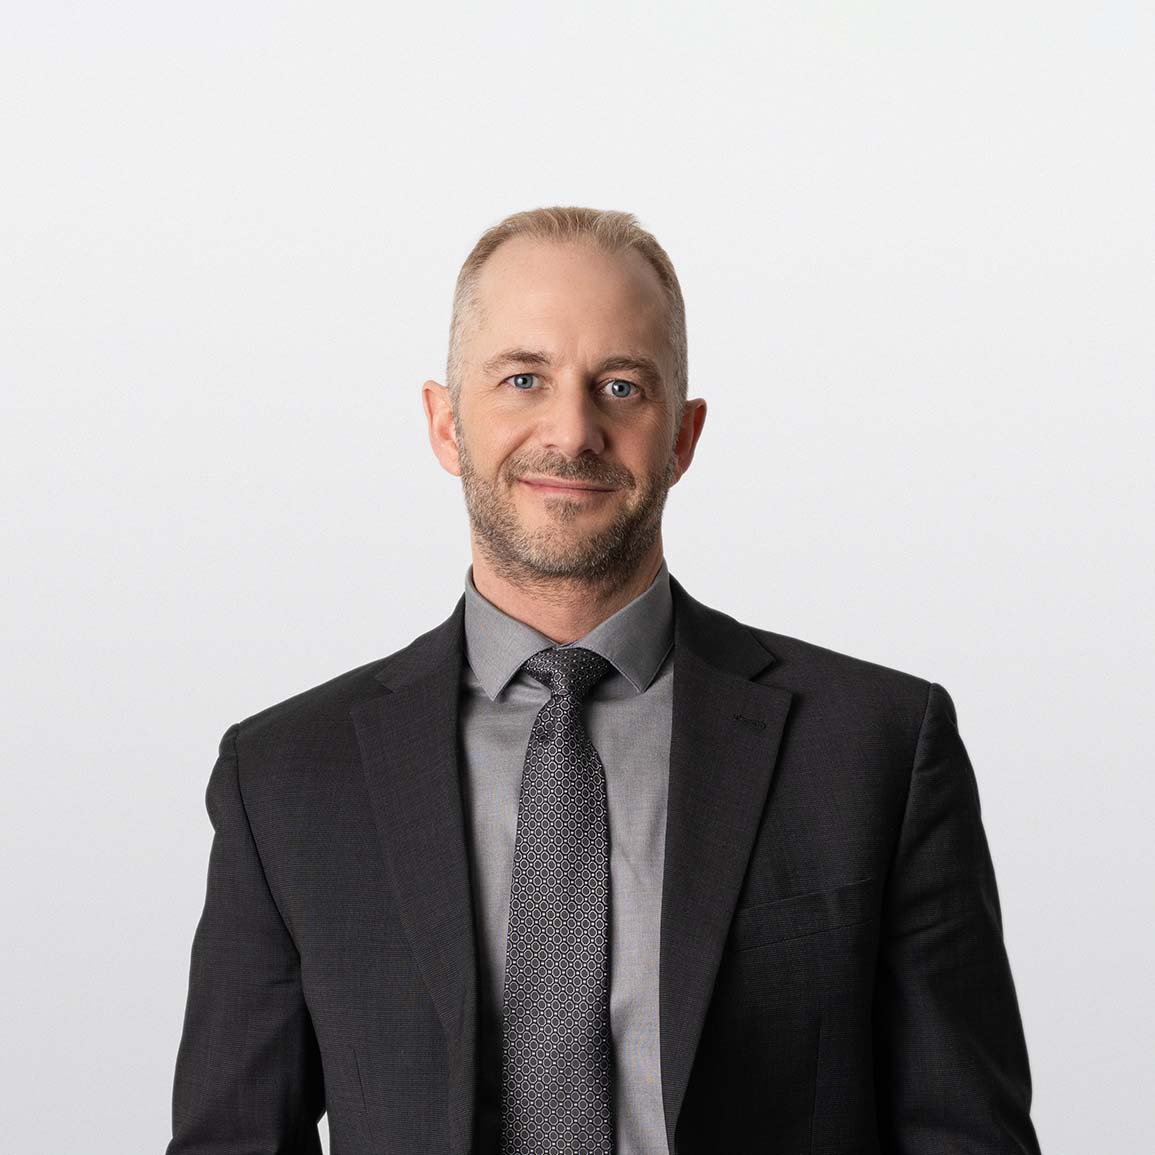 Image of Ryan Thompson, Senior Financial Advisor on white background.